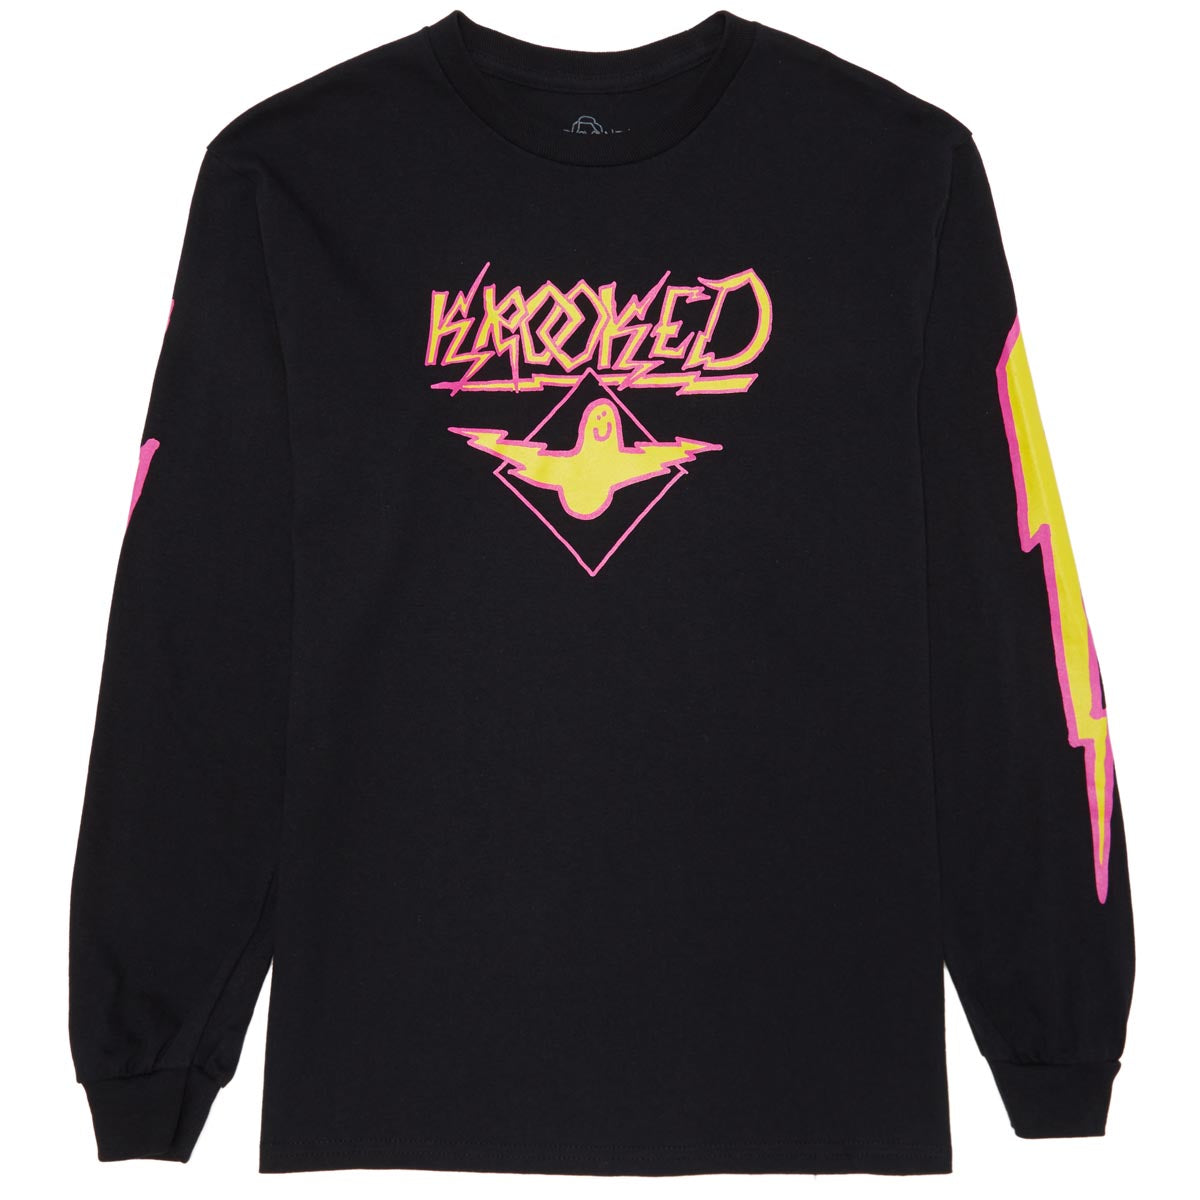 Krooked Bird Lightening Long Sleeve T-Shirt - Black/Magenta/Yellow image 1